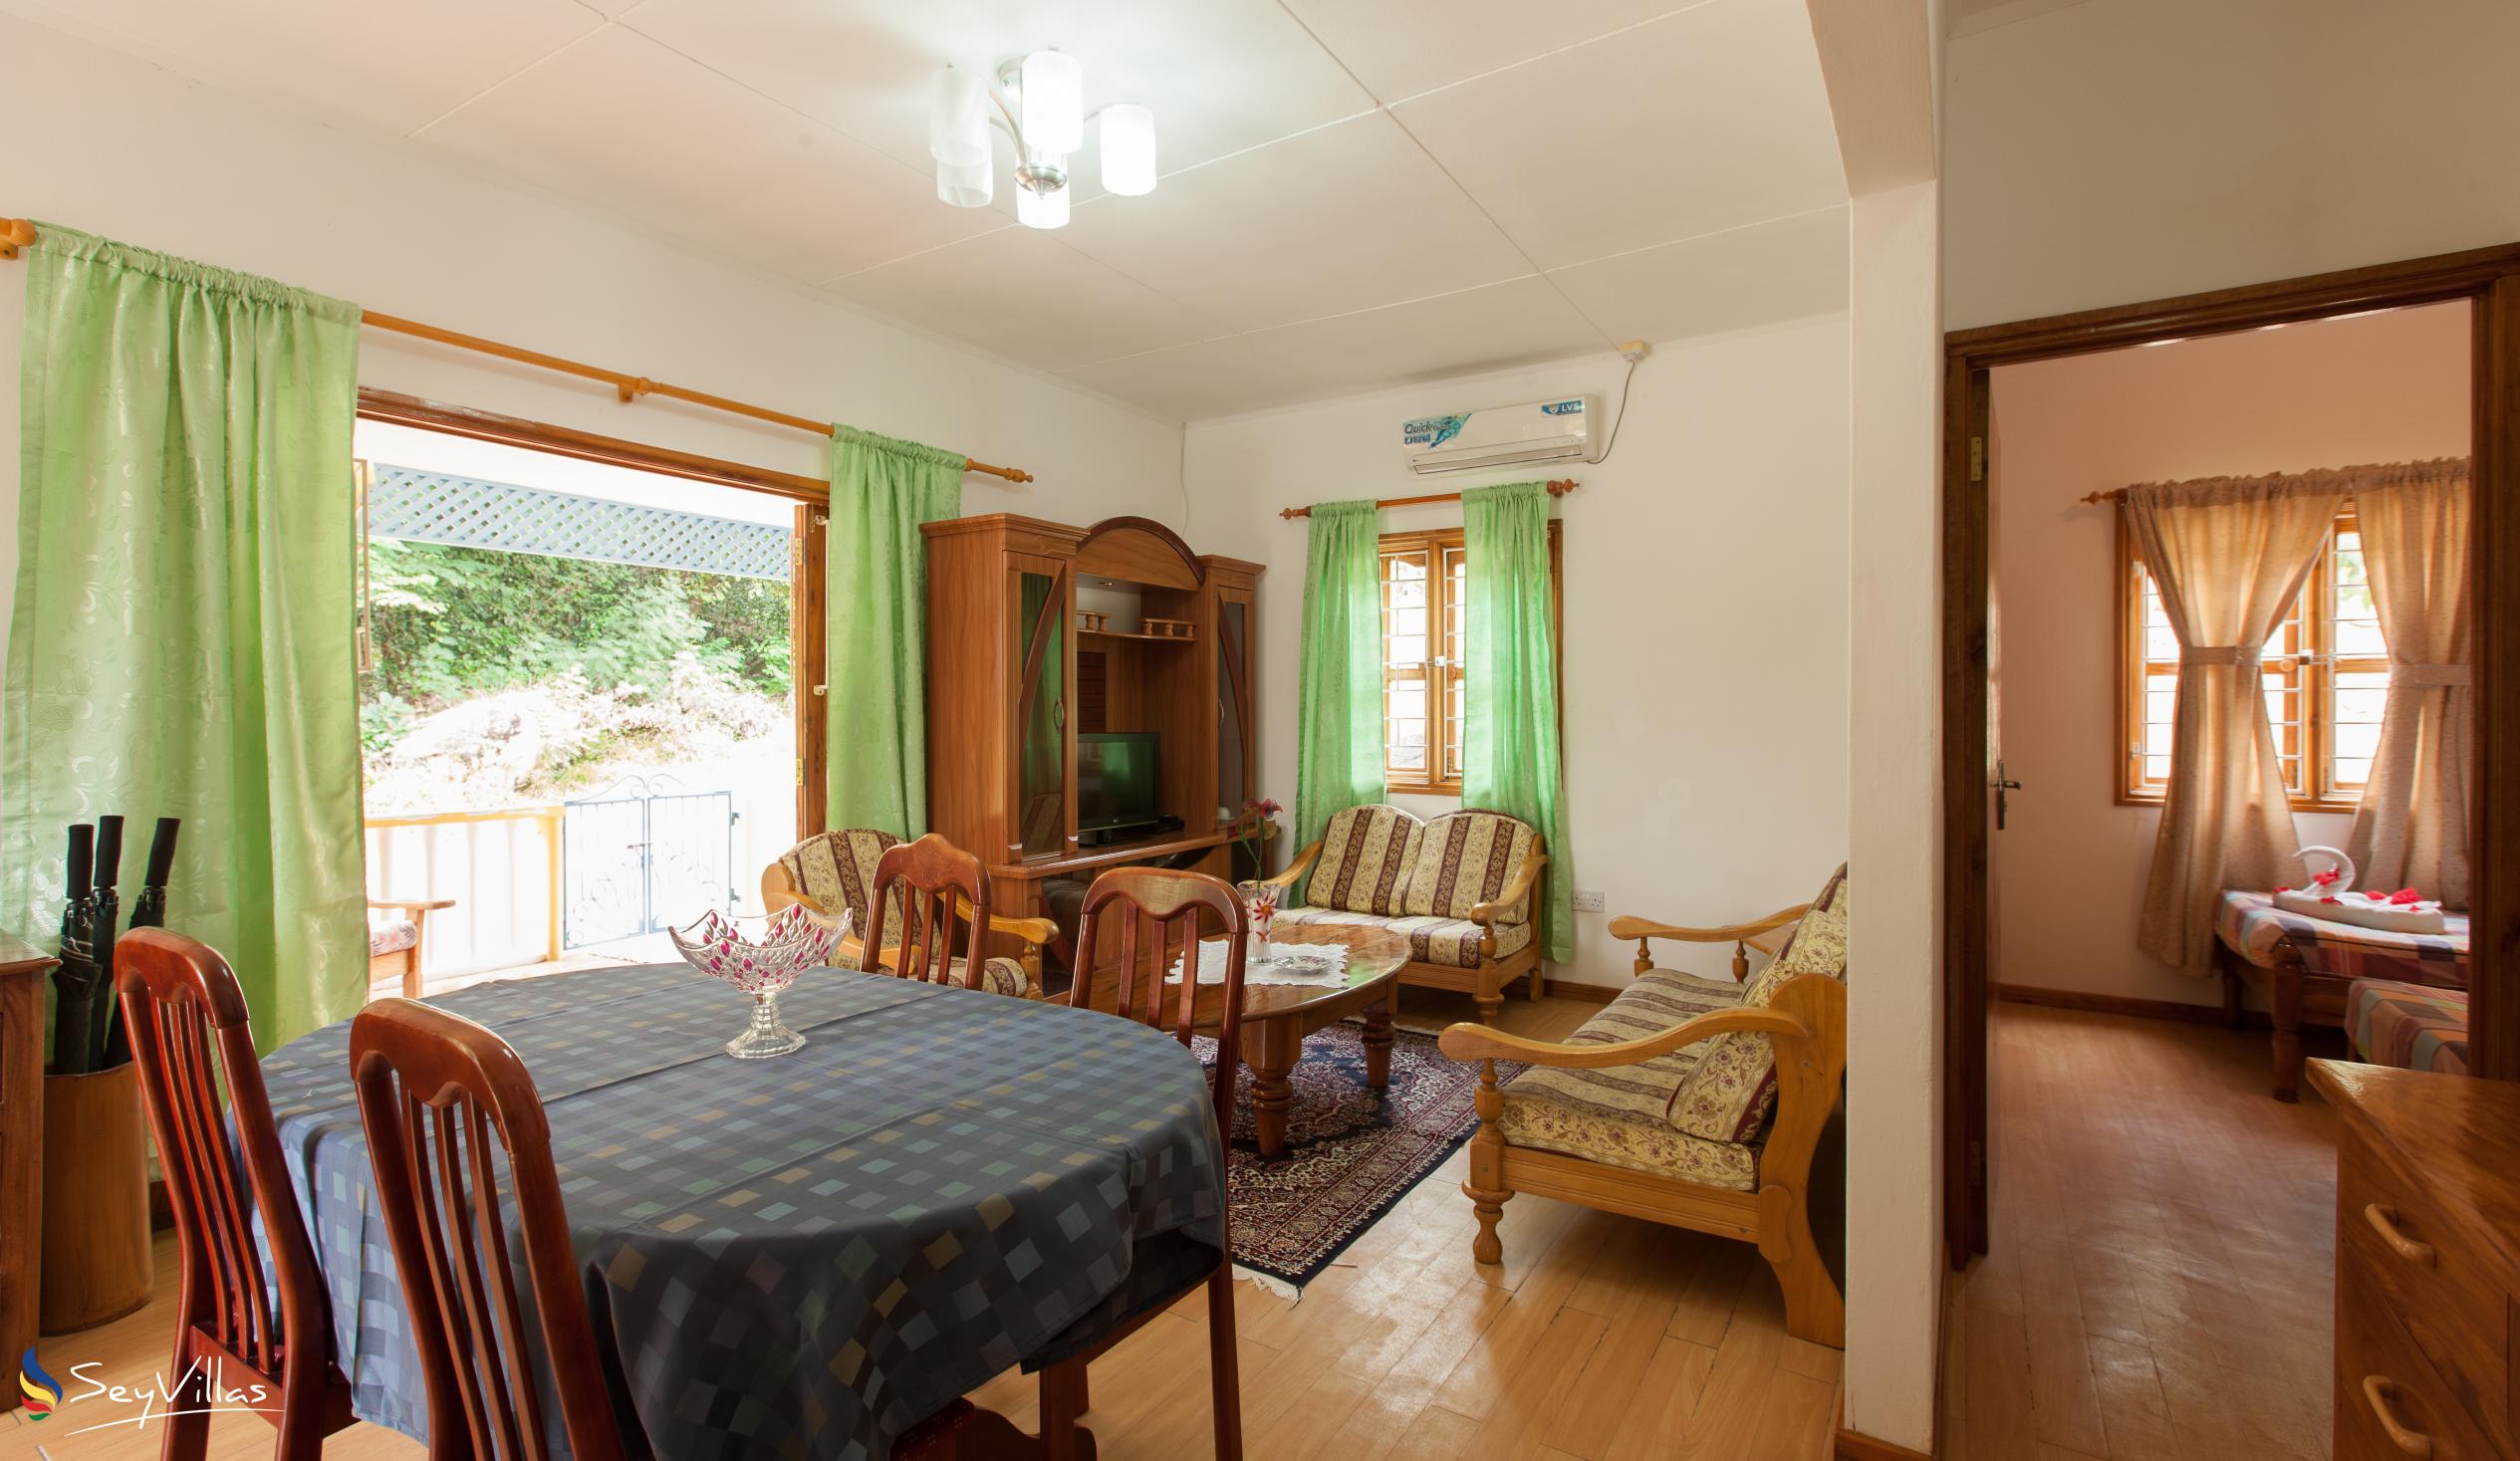 Photo 67: Acquario Villa - 2-Bedroom Family Villa - Praslin (Seychelles)